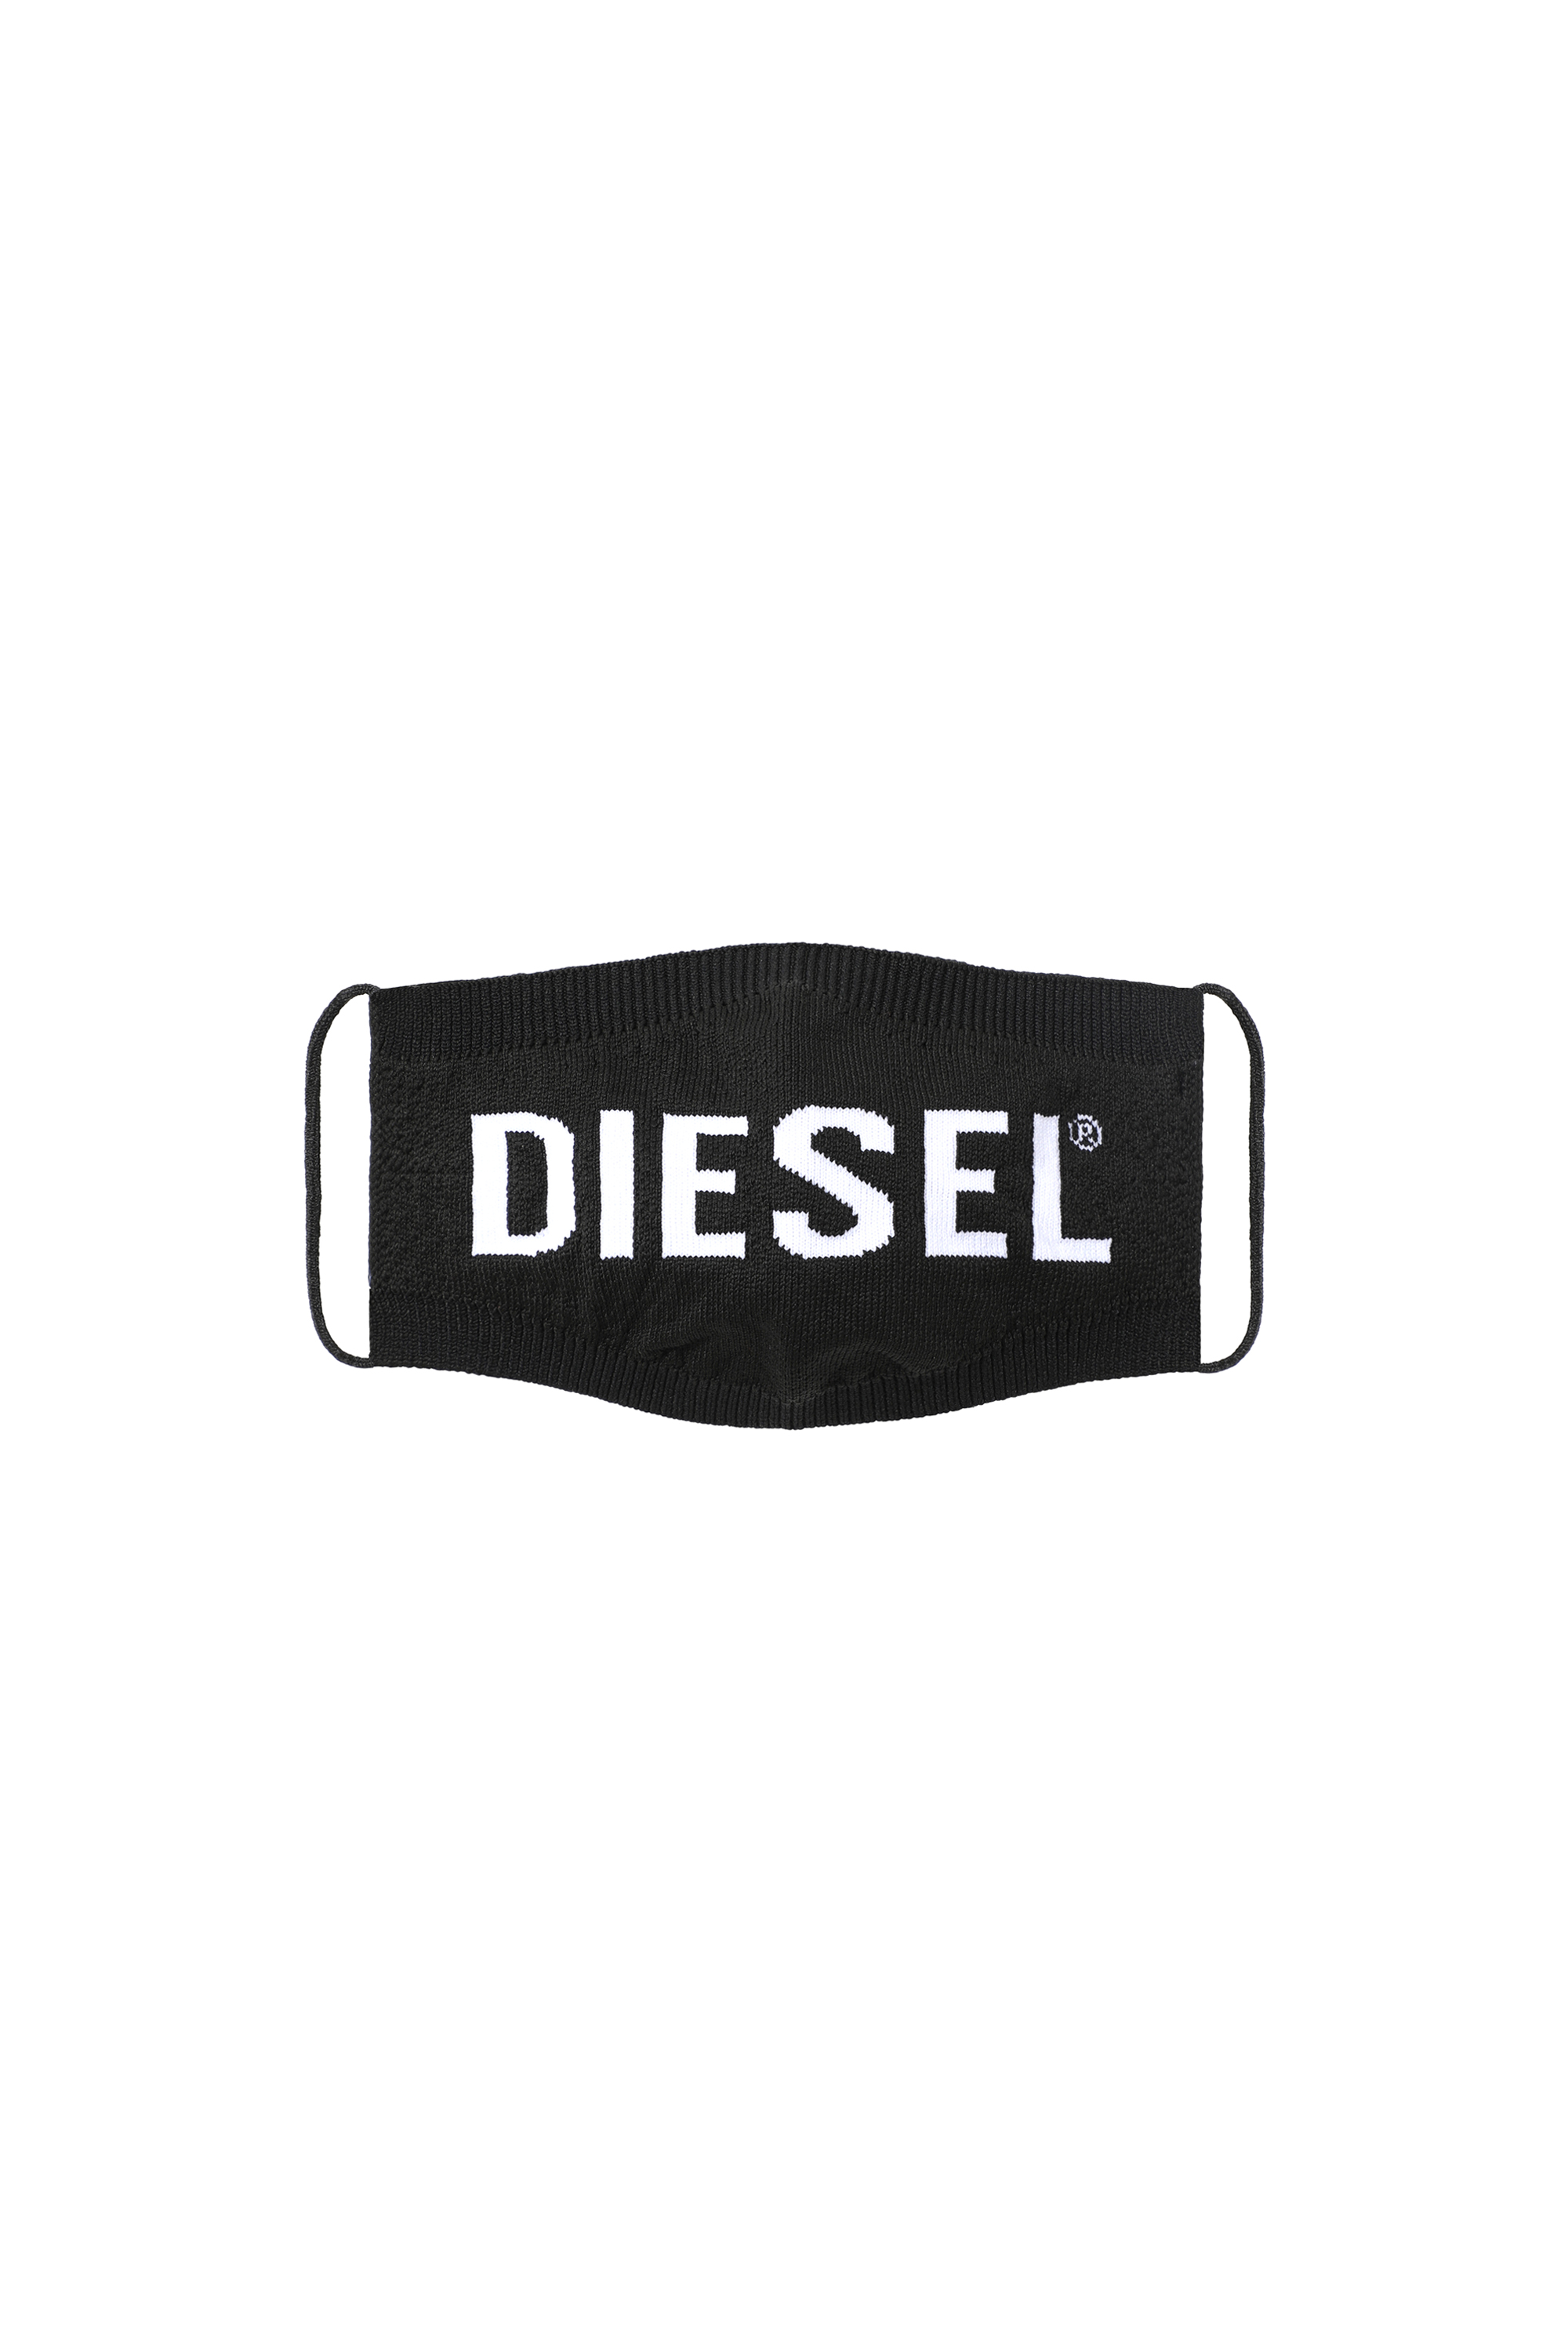 Diesel - VELIC, Black - Image 1